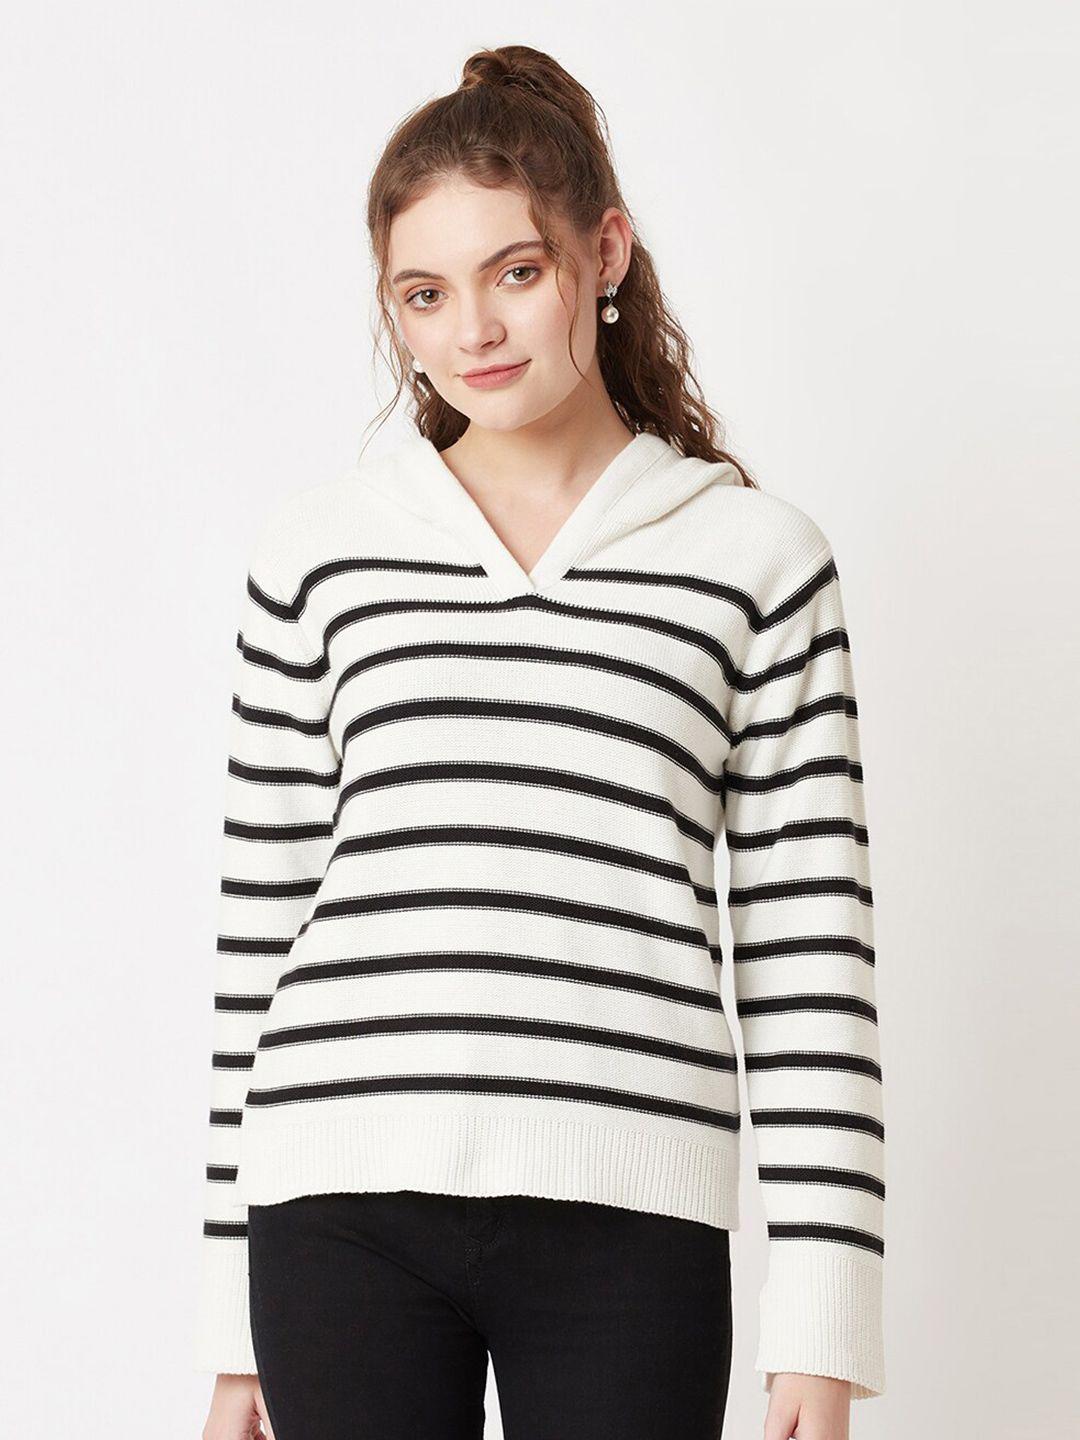 miramor-women-striped-hooded-pullover-sweater